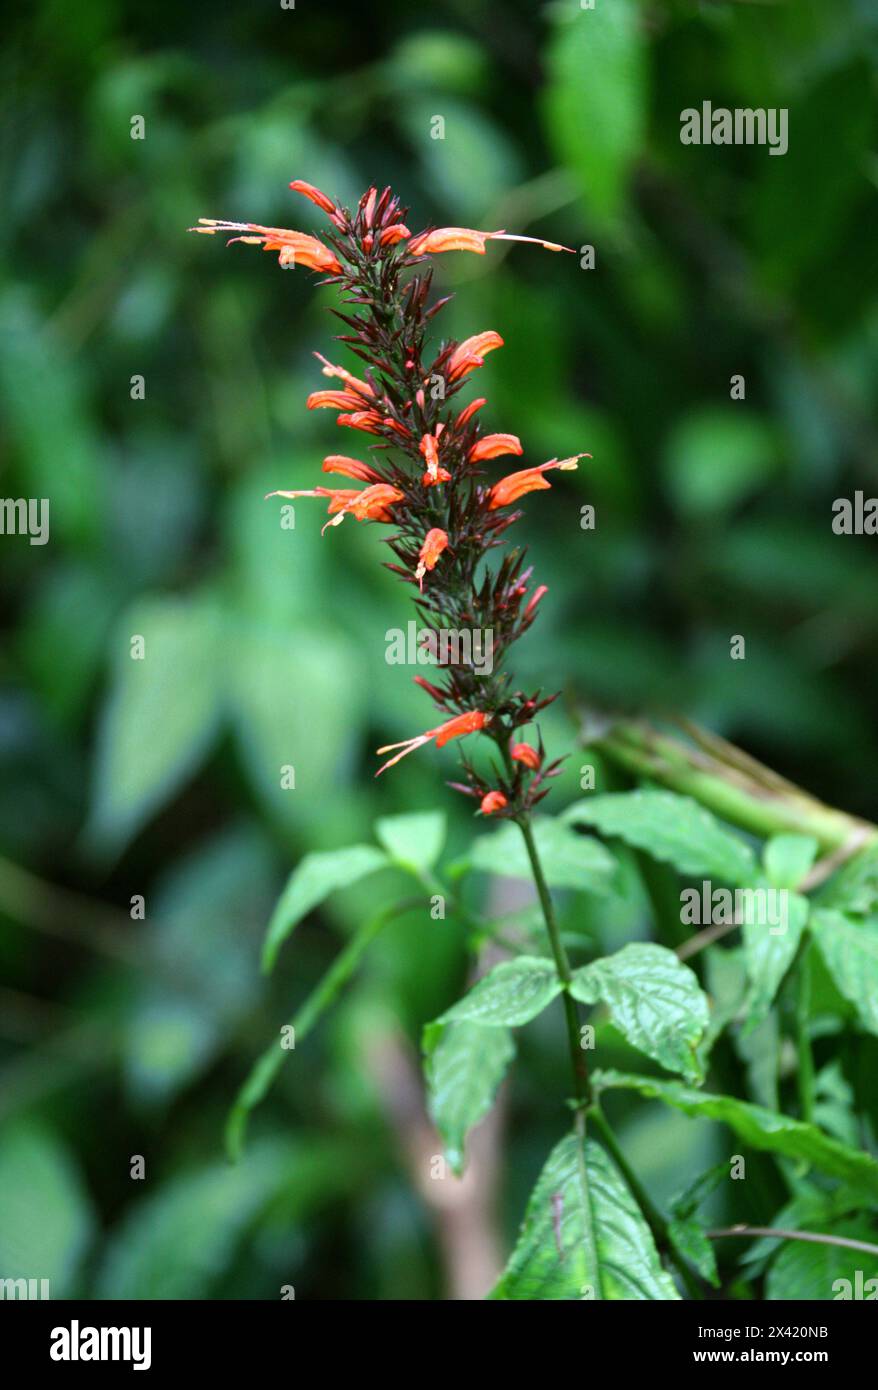 Pavón de montaña, Stenostephanus blepharorhachis, Justicieae, Acanthaceae. Fiori d'arancio nella Foresta nuvola di Monteverde, Costa Rica, America centrale. Foto Stock